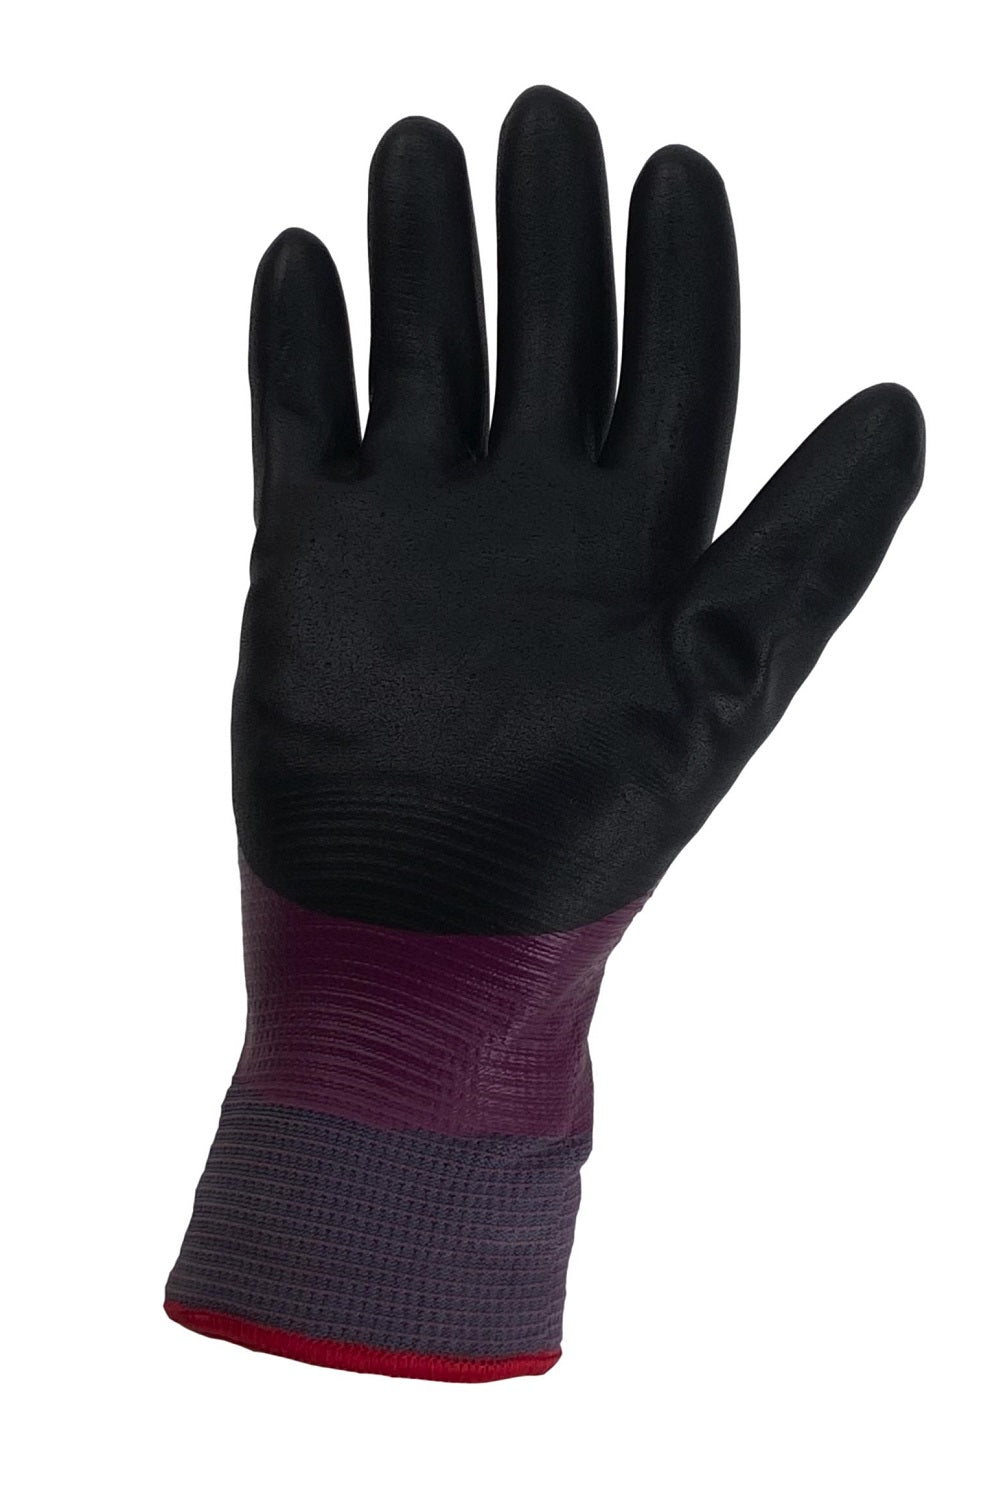 ATG MAxiDry Zero Winter Work Gloves Grip Palm protexU